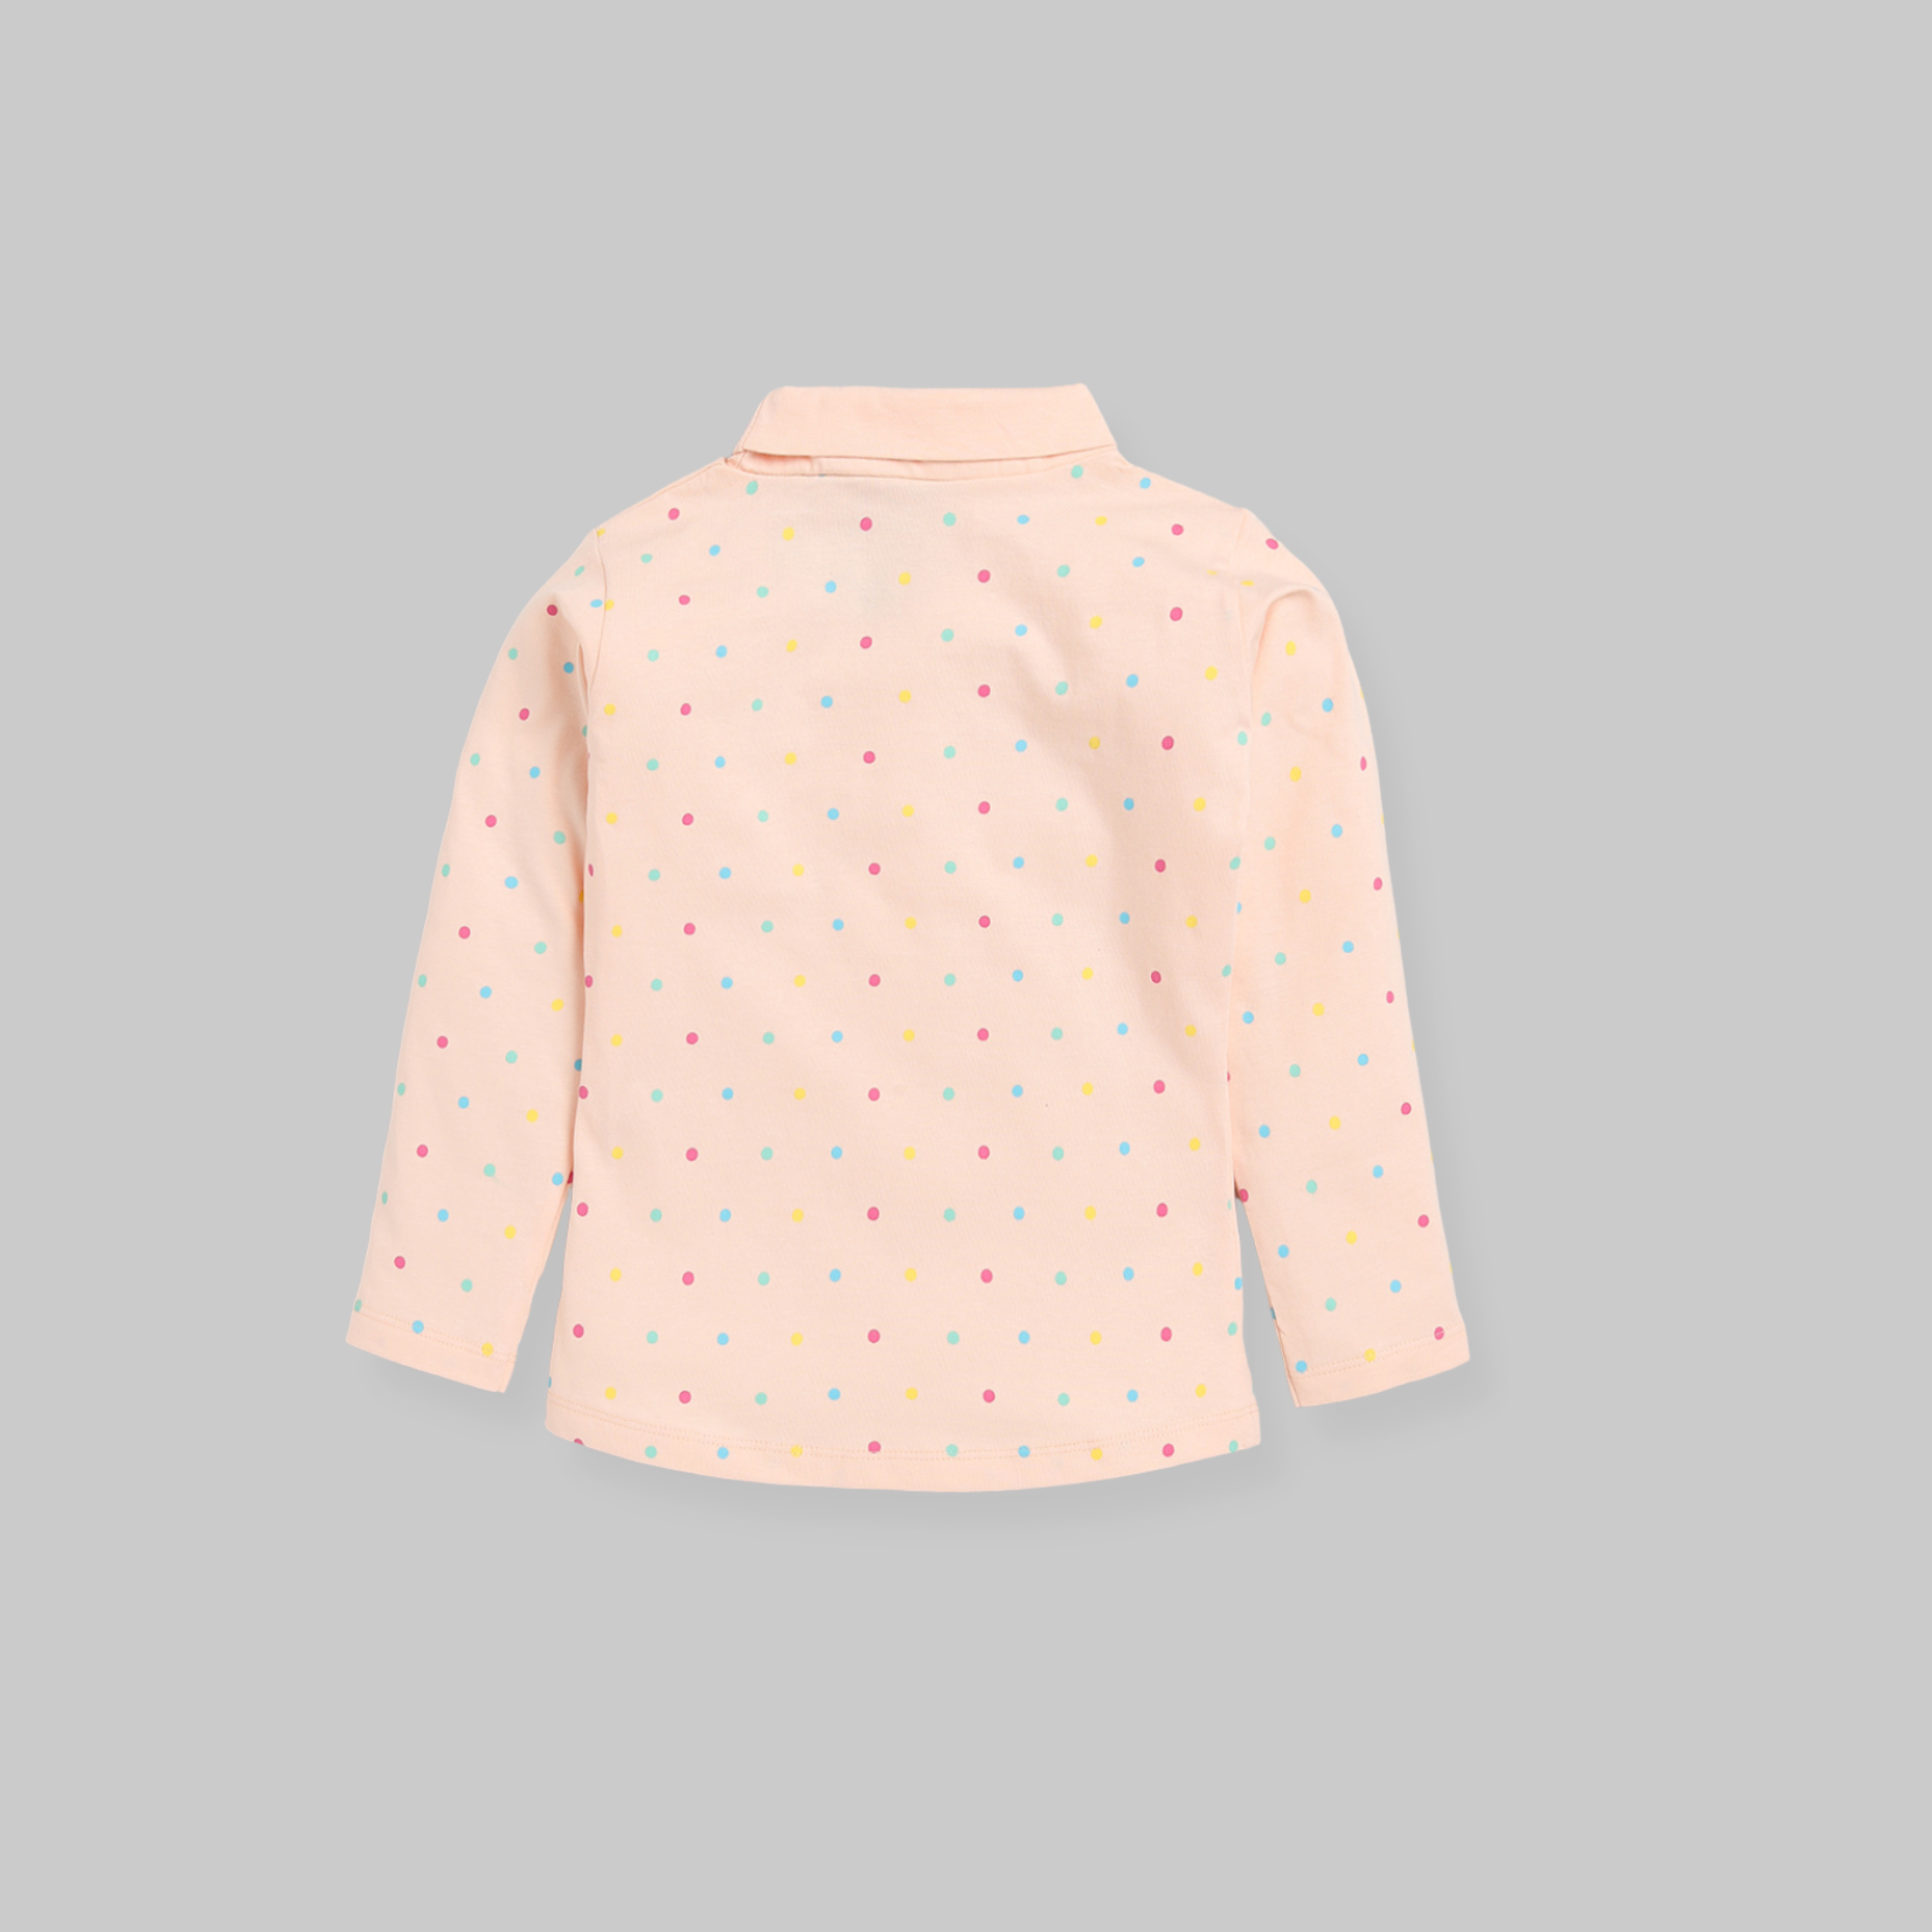 Full Sleeve Printed Top for Girls - Peach